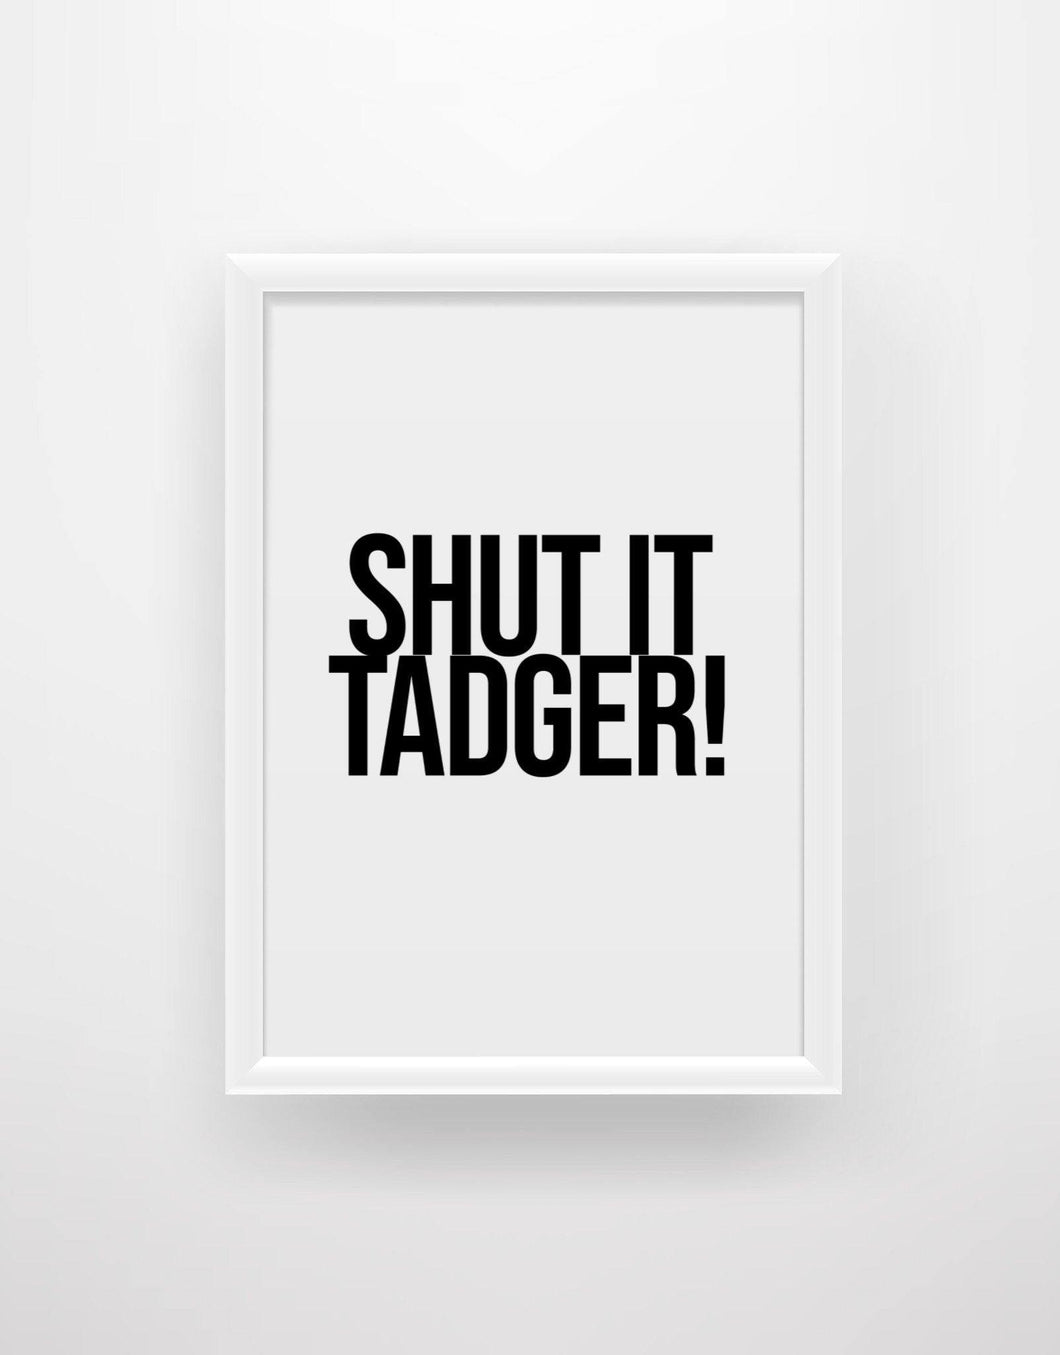 Shut it tadger! - Still Game Quote Print - Chic Prints